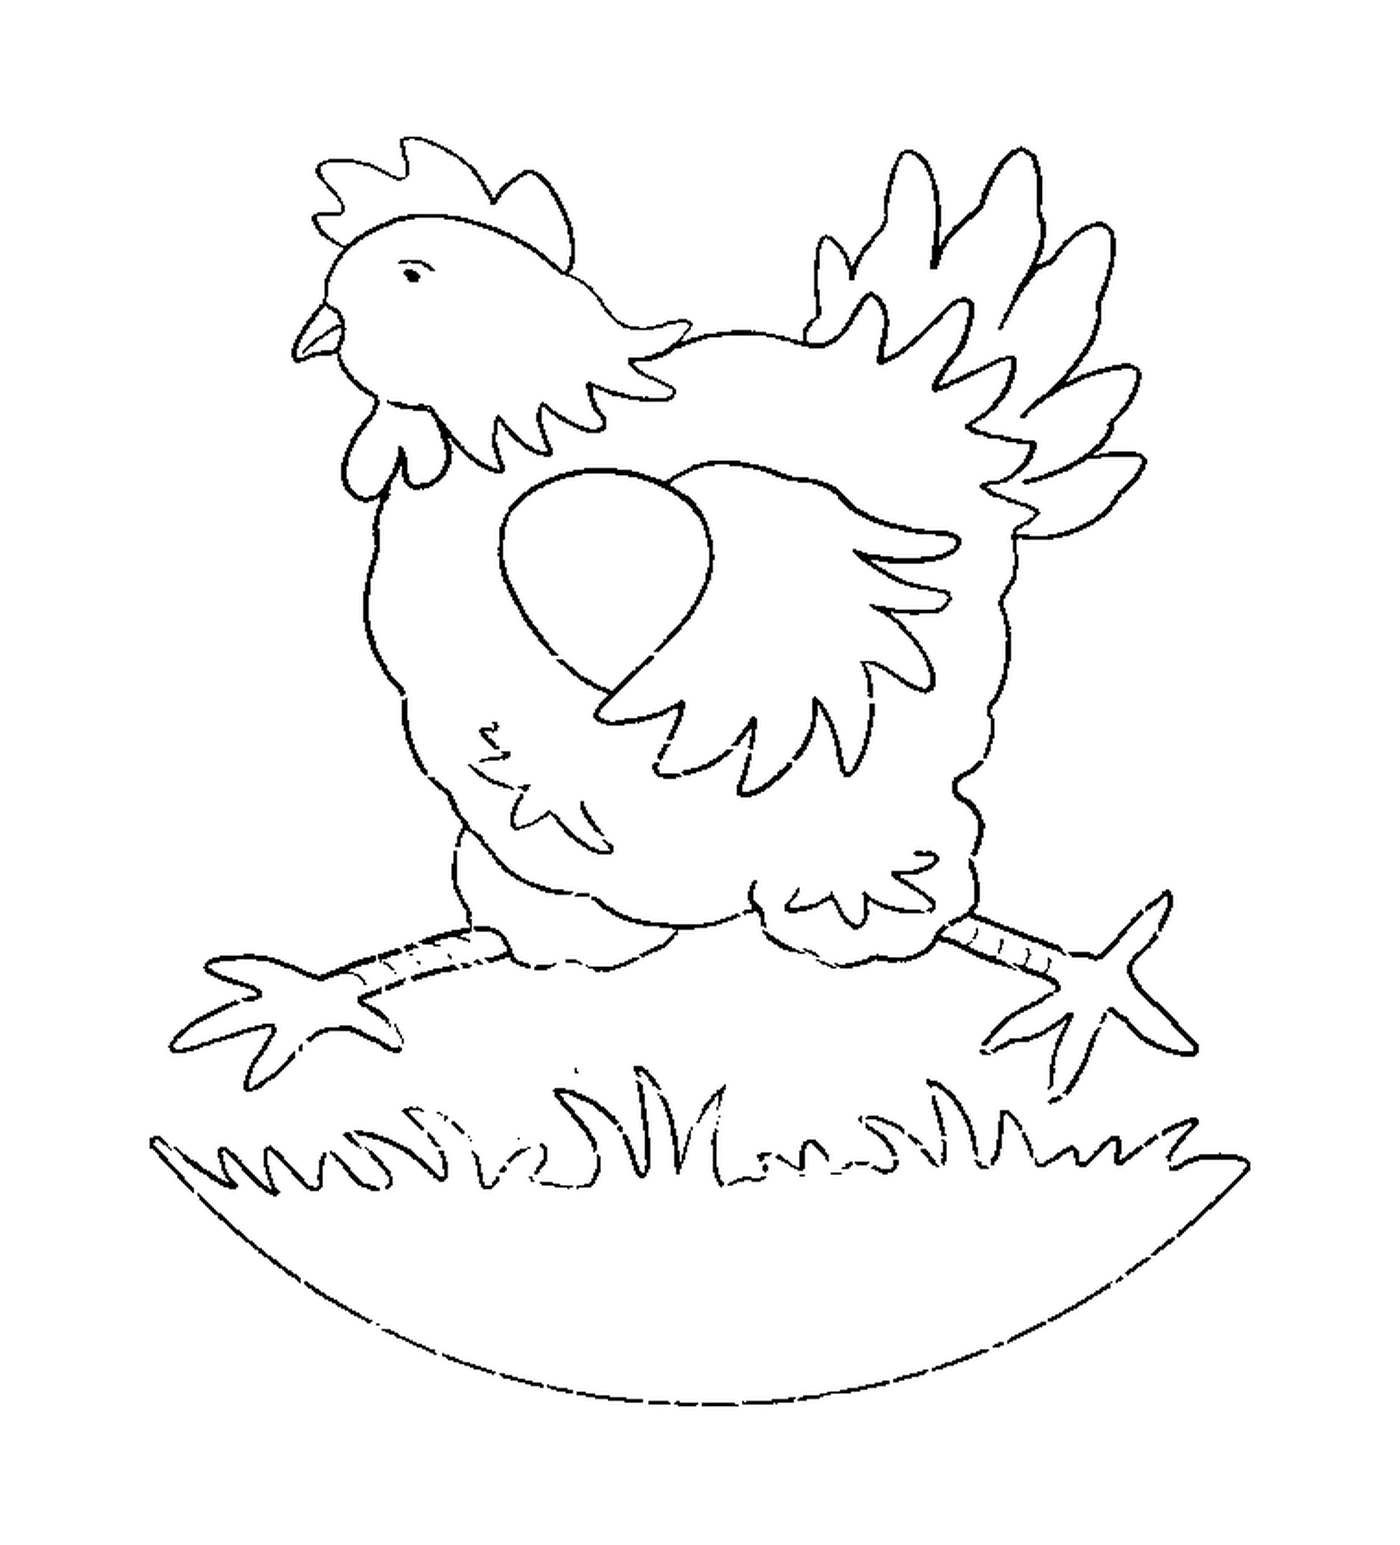  Chicken standing on egg 